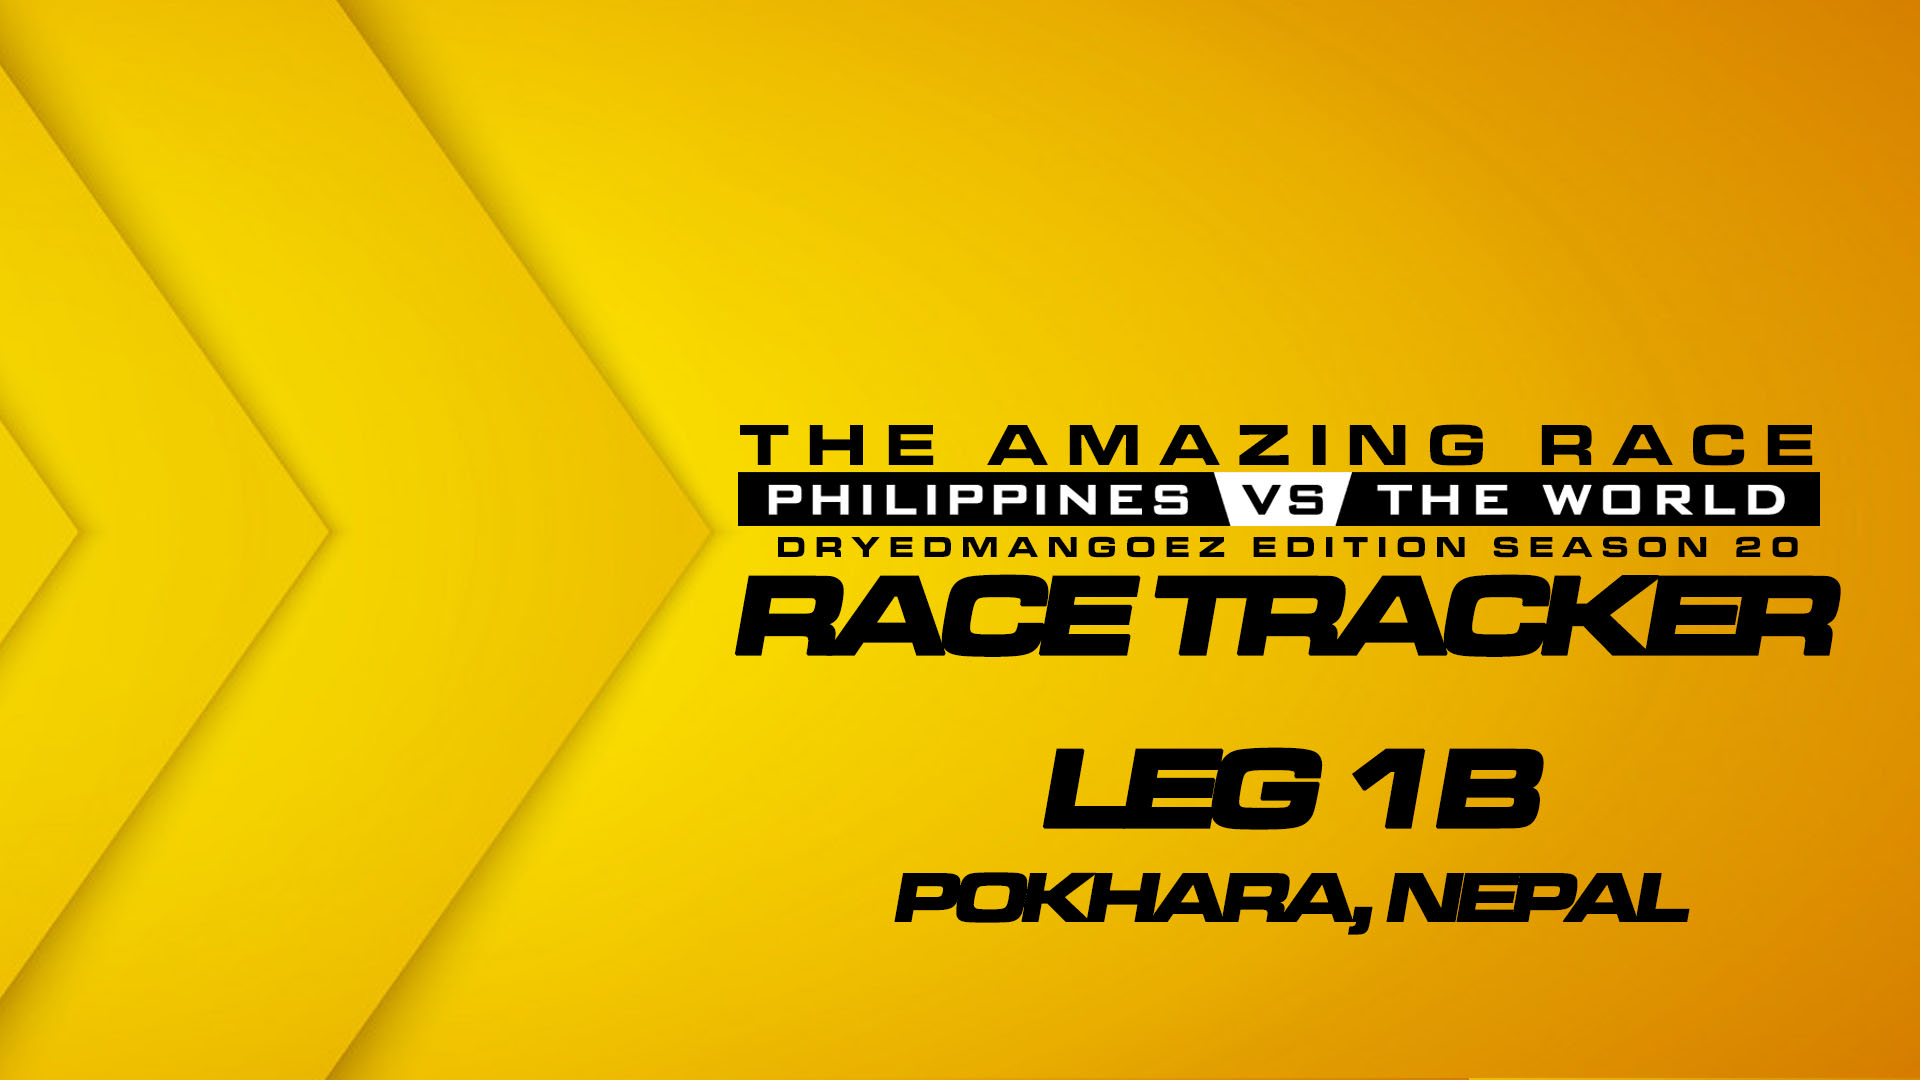 The Amazing Race Philippines vs The World (DryedMangoez Edition Season 20) Race Tracker – Leg 2